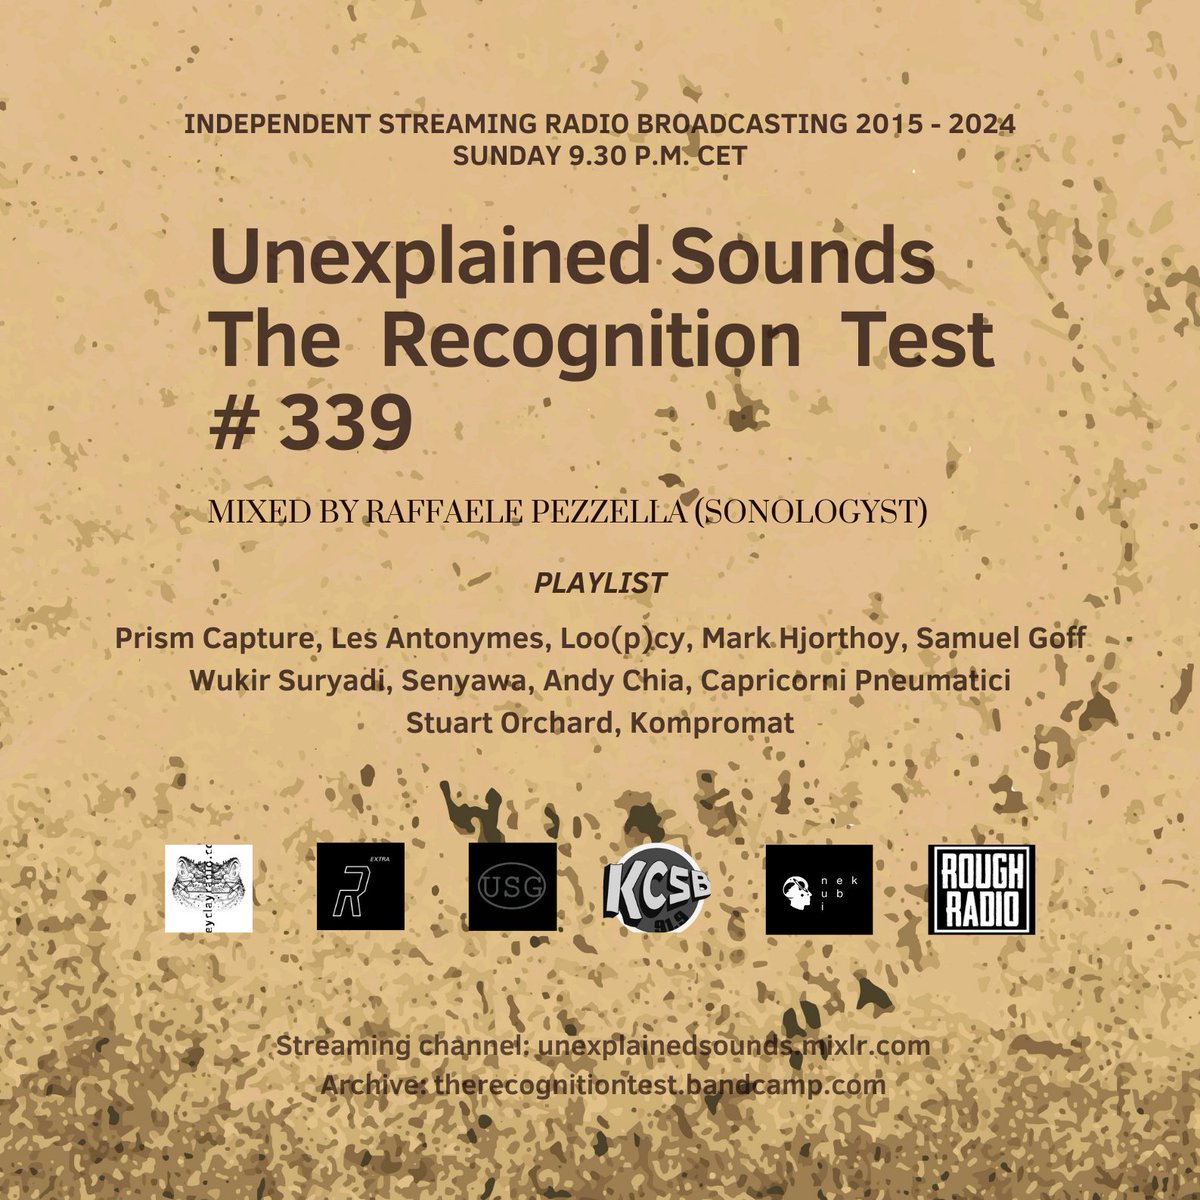 Sunday, April 7th, 2024. H 9.30 P.M. CET Unexplained Sounds radio transmission, The Recognition Test # 339. Mixed by Raffaele Pezzella (a.k.a. Sonologyst). Streaming: unexplainedsounds.mixlr.com